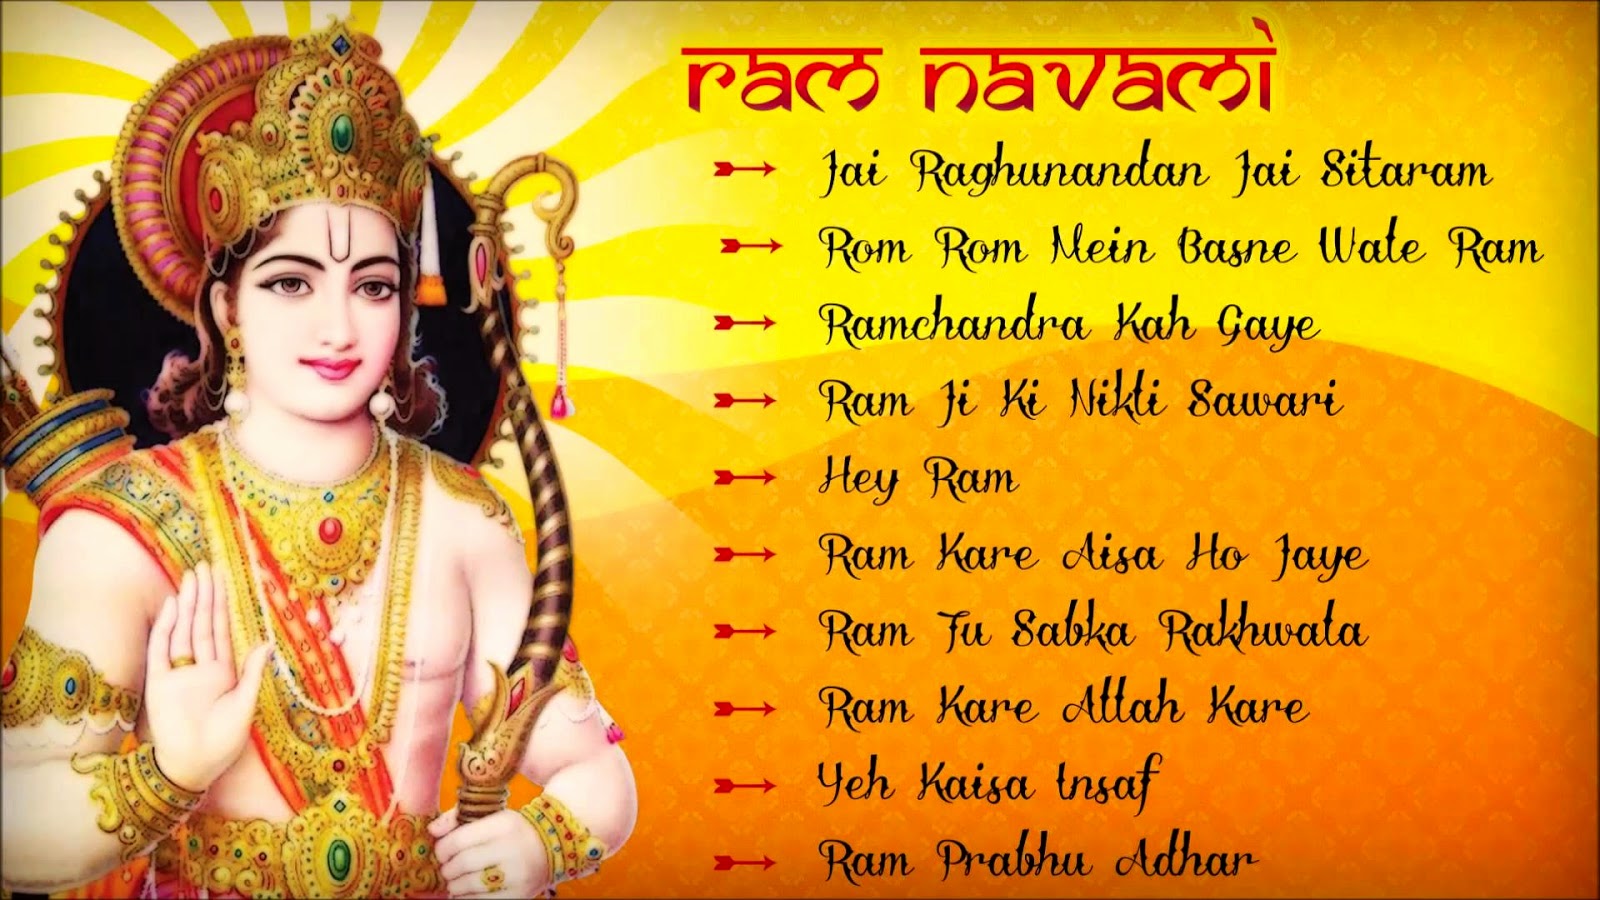 Sri Ram Navami Images HD Wallpapers – Happy Sri Rama Navami 2019 Pics Photos  Pictures Free Download